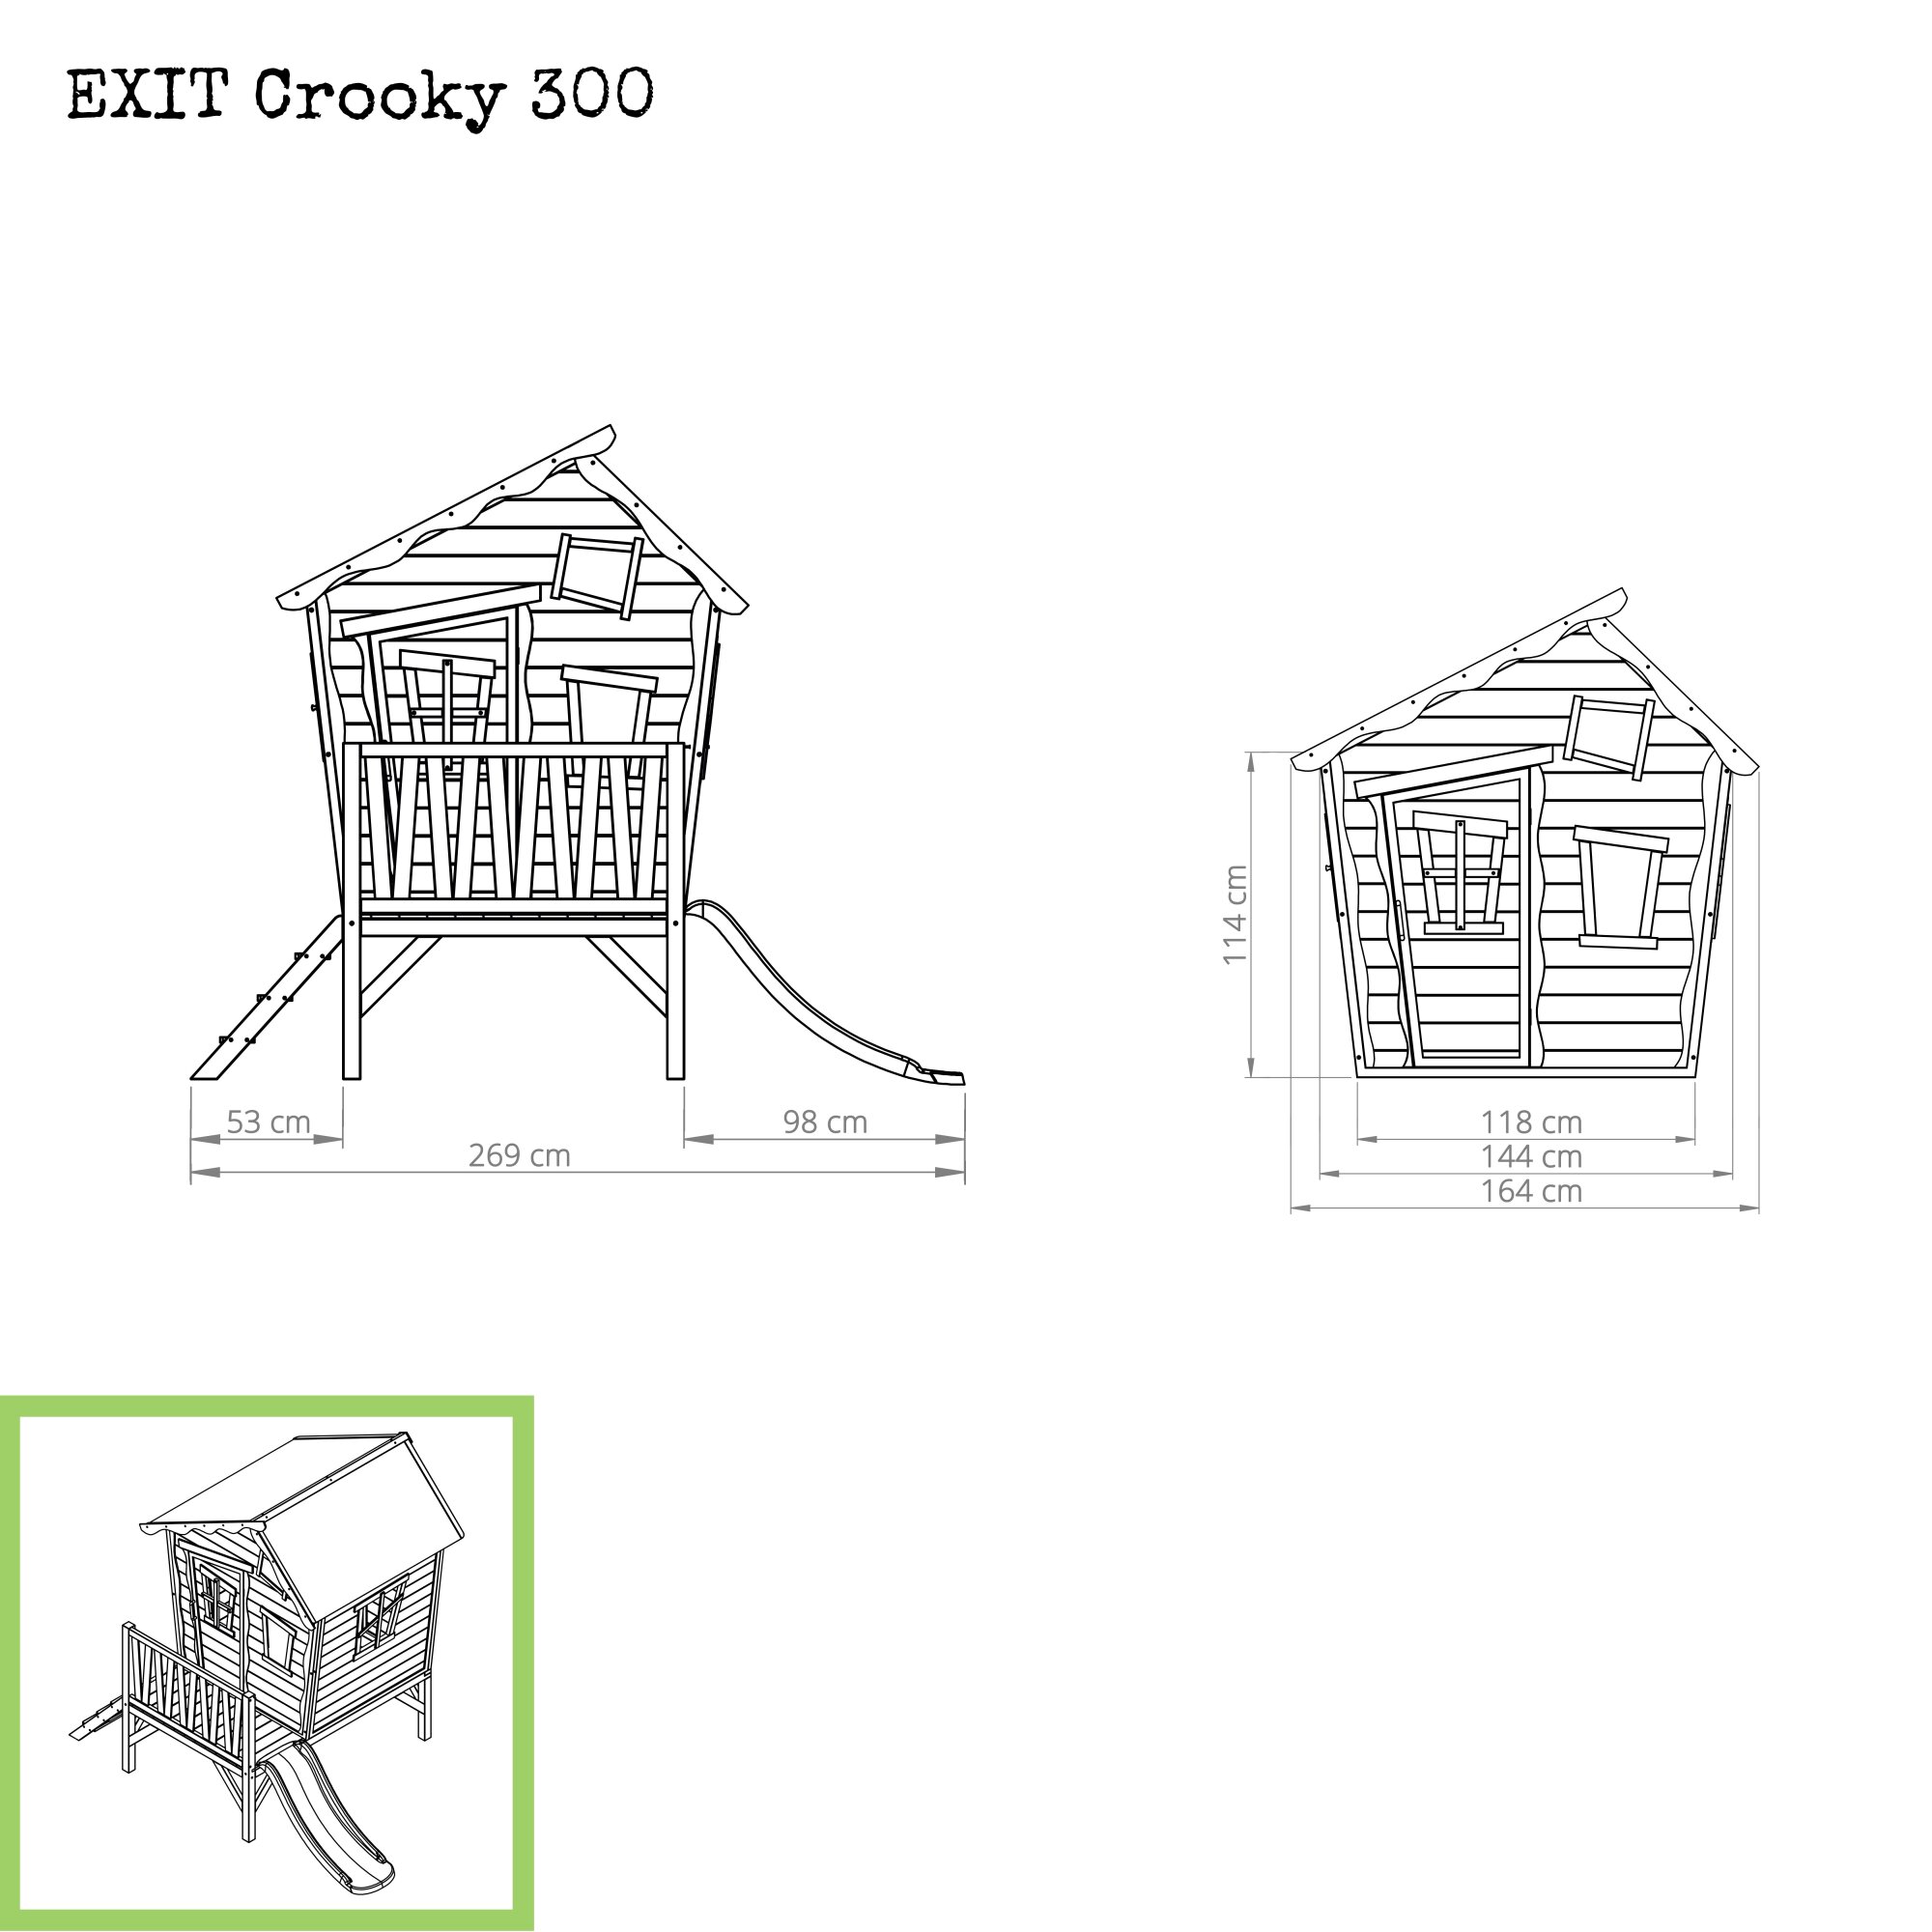 EXIT Crooky 300 Holzspielhaus graubeige Aufbau